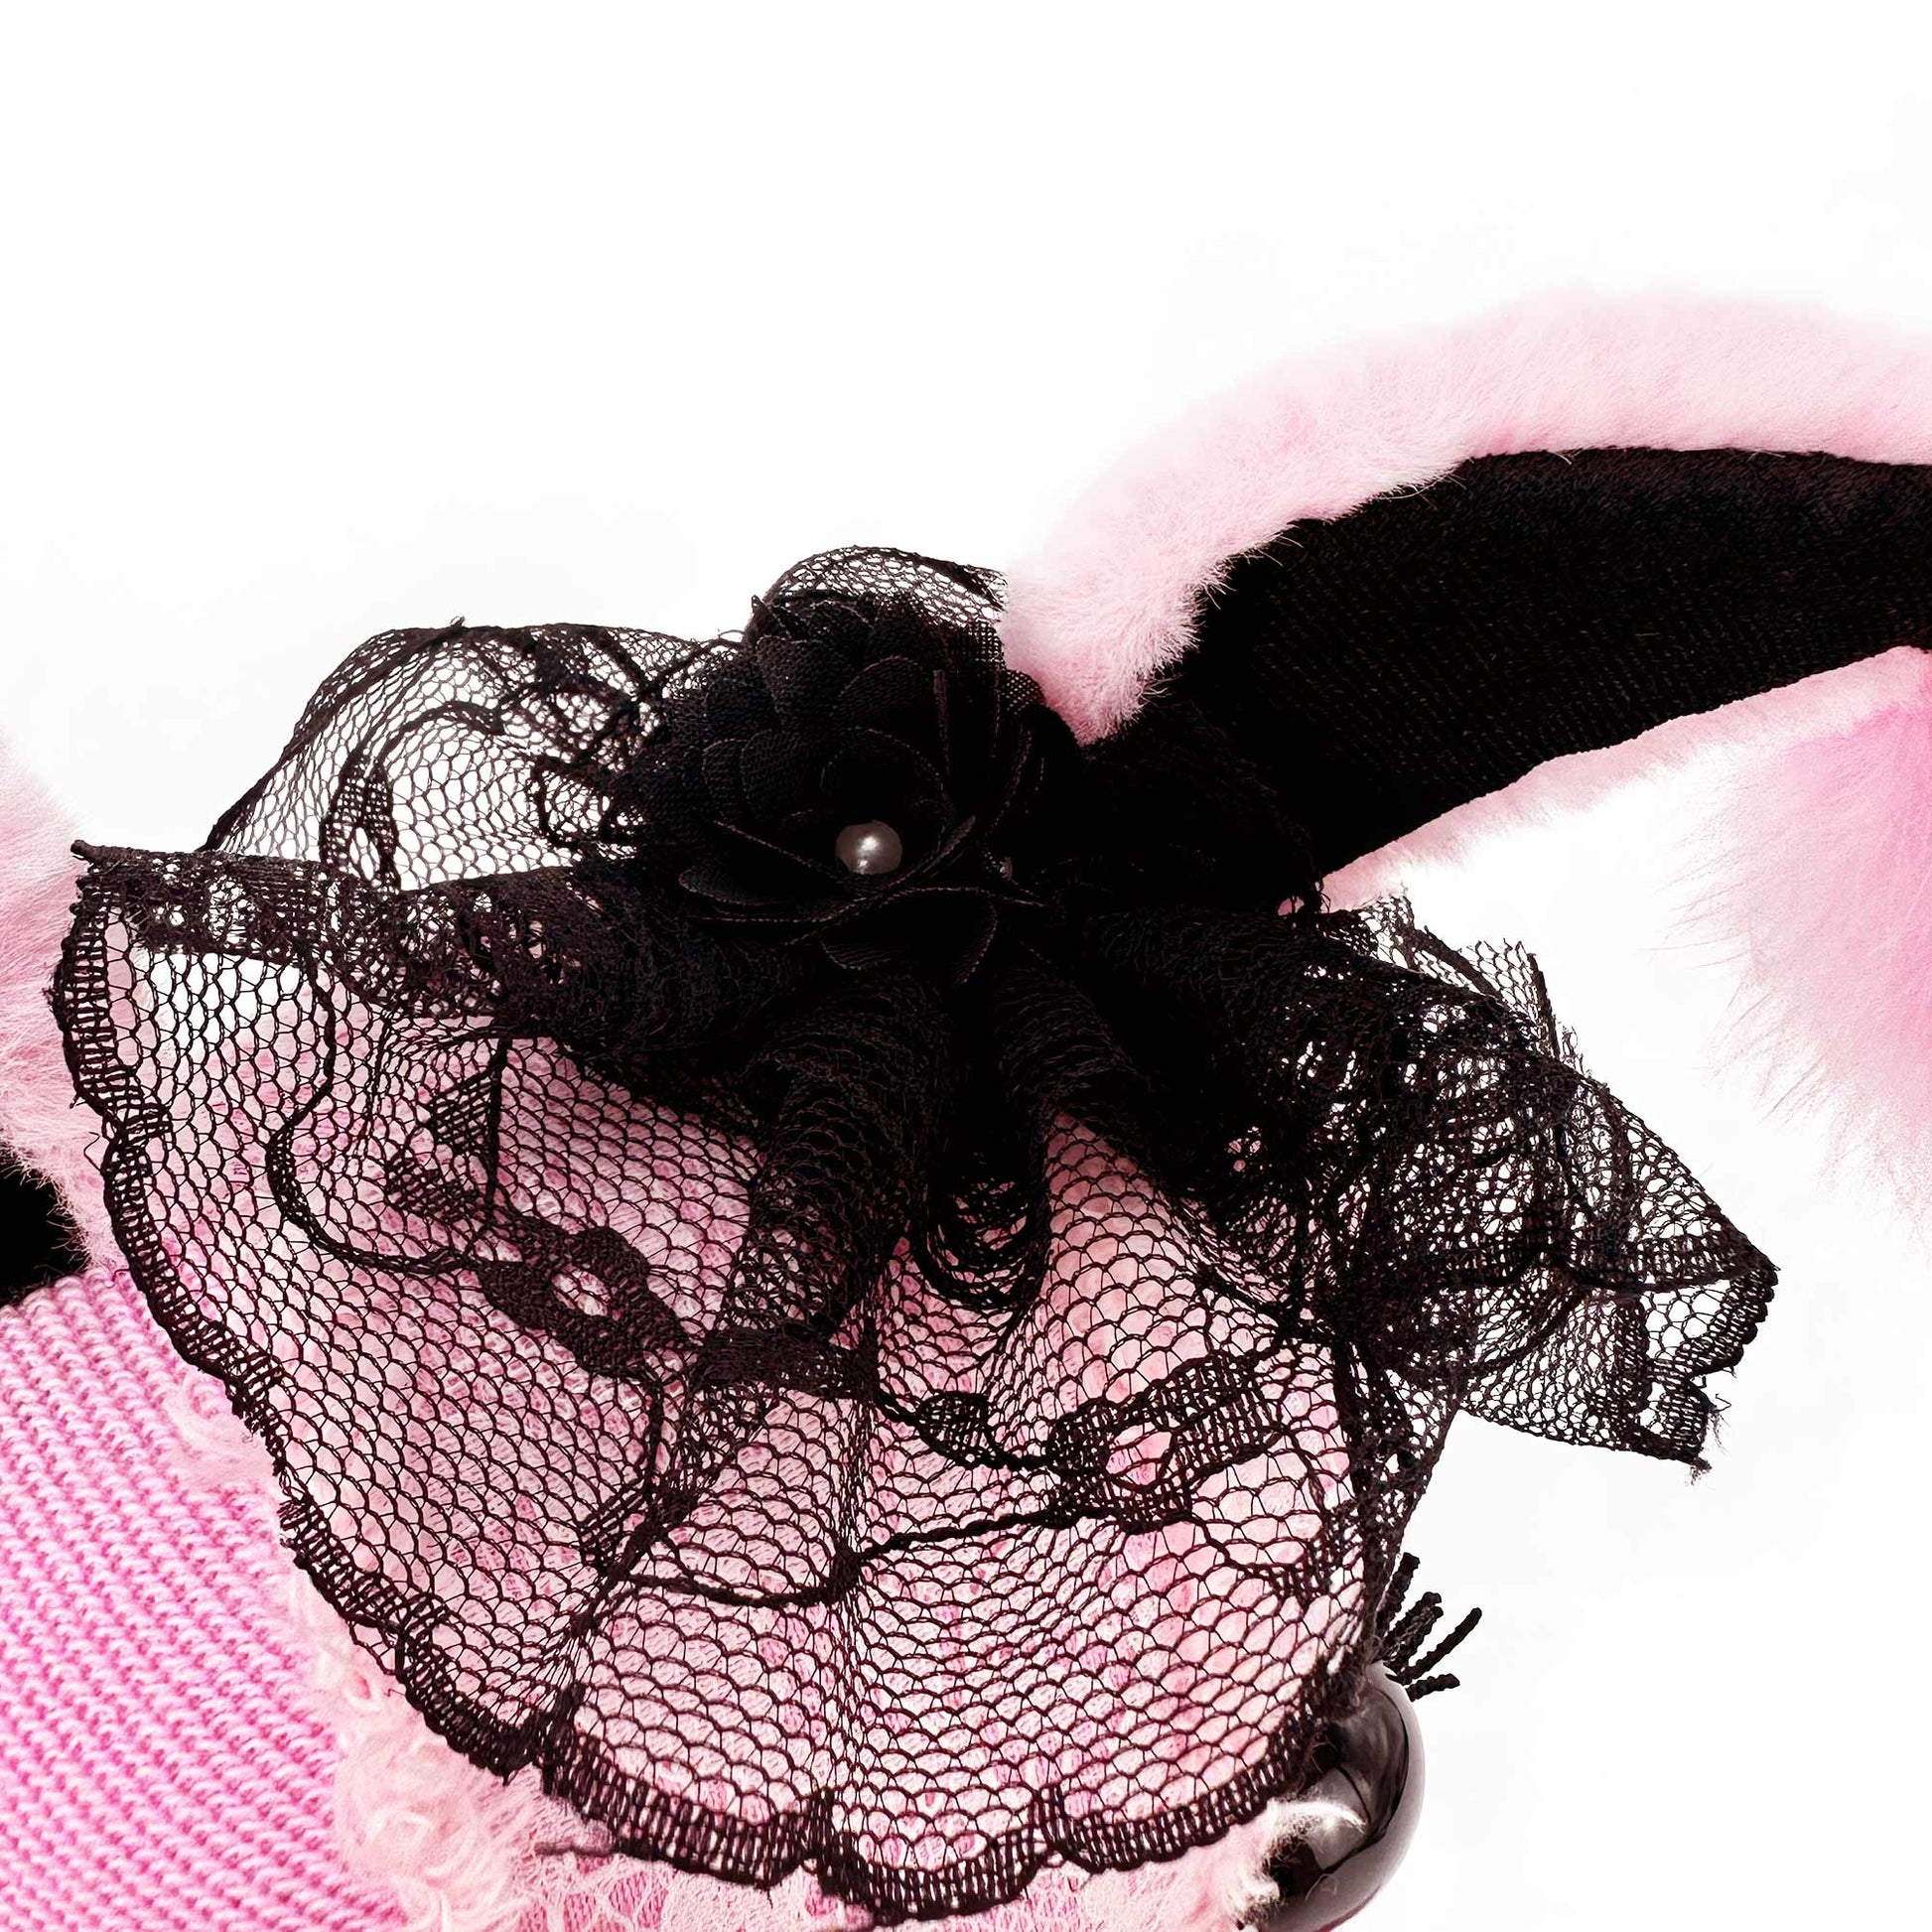 Top of pink bunny stuffed animal head